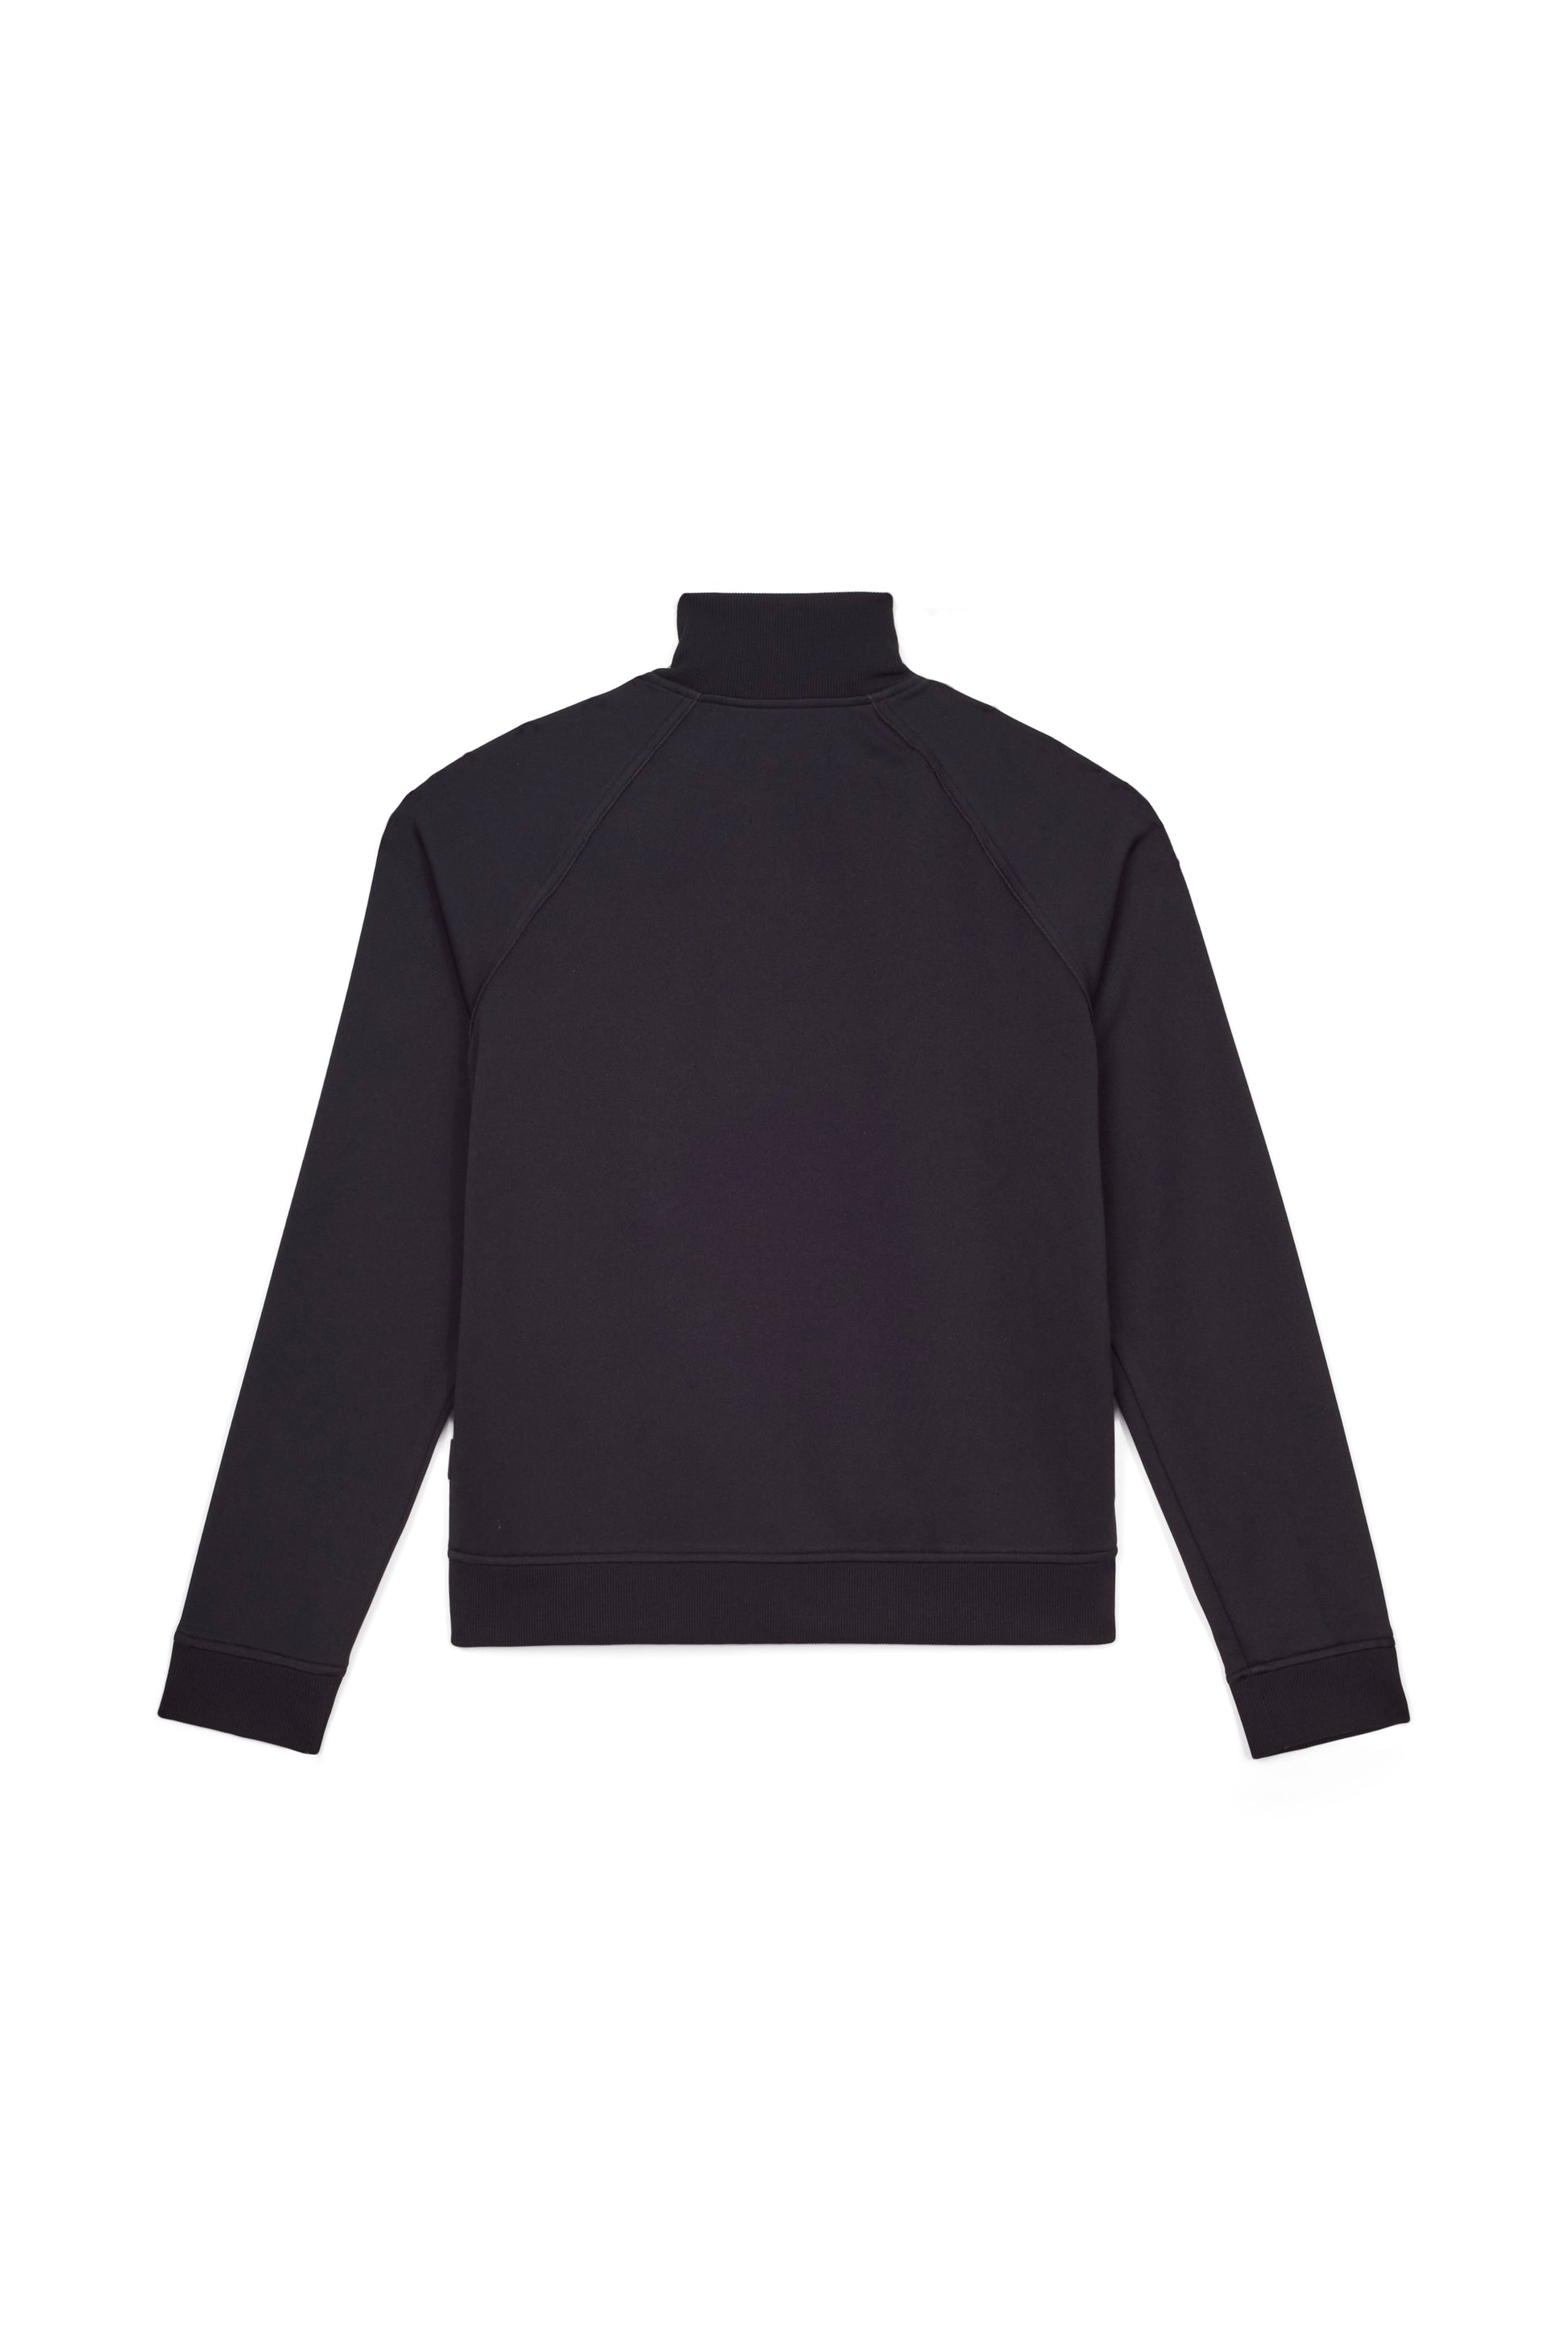 PURPLE BRAND - Men's Track Jacket - Style No. P414 - Black Raglan Bullion Patch - Back